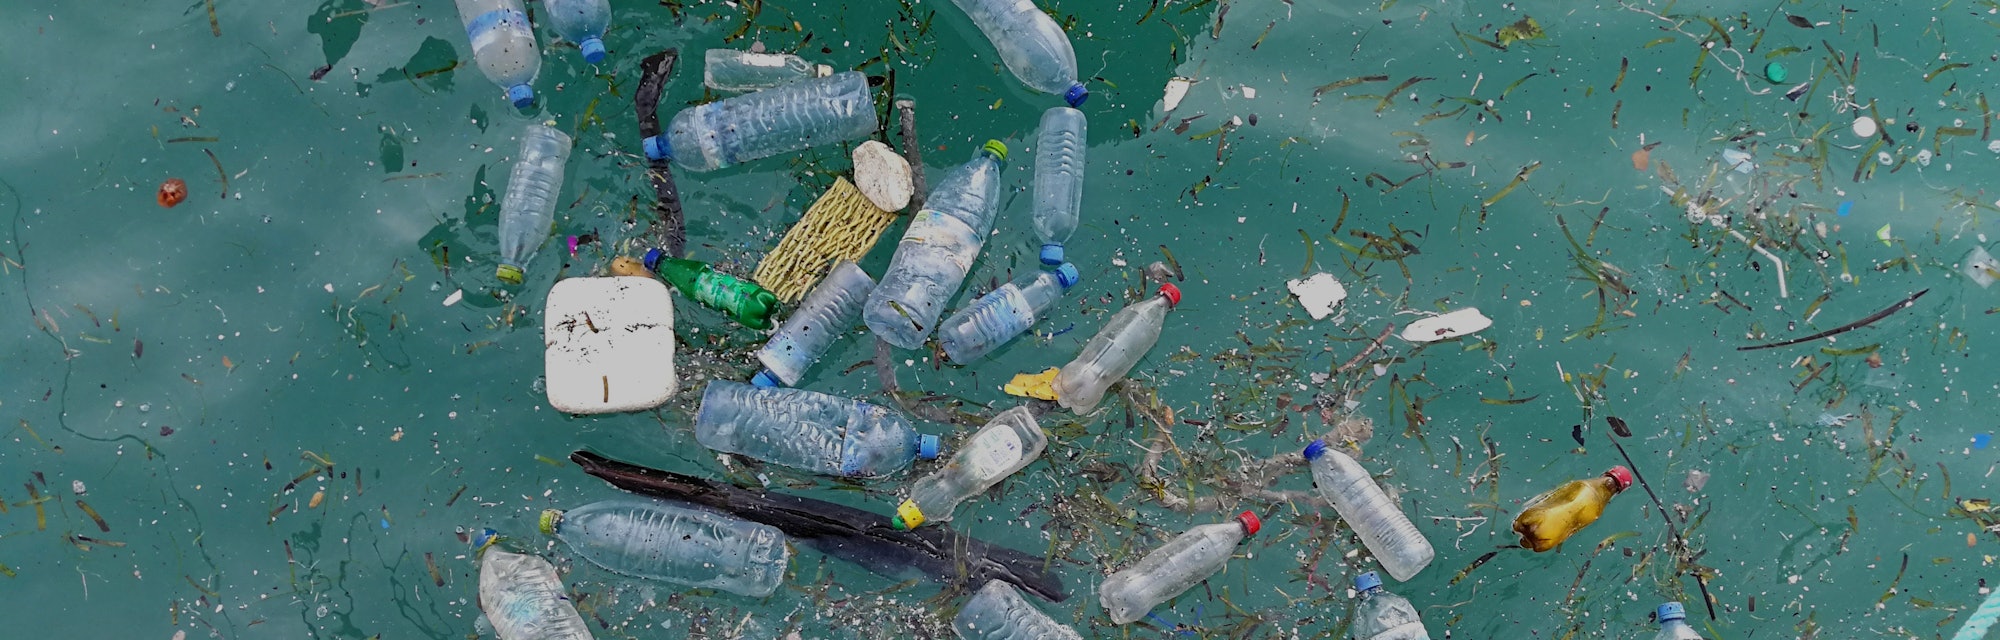 Plastic bottle in the ocean sea water 